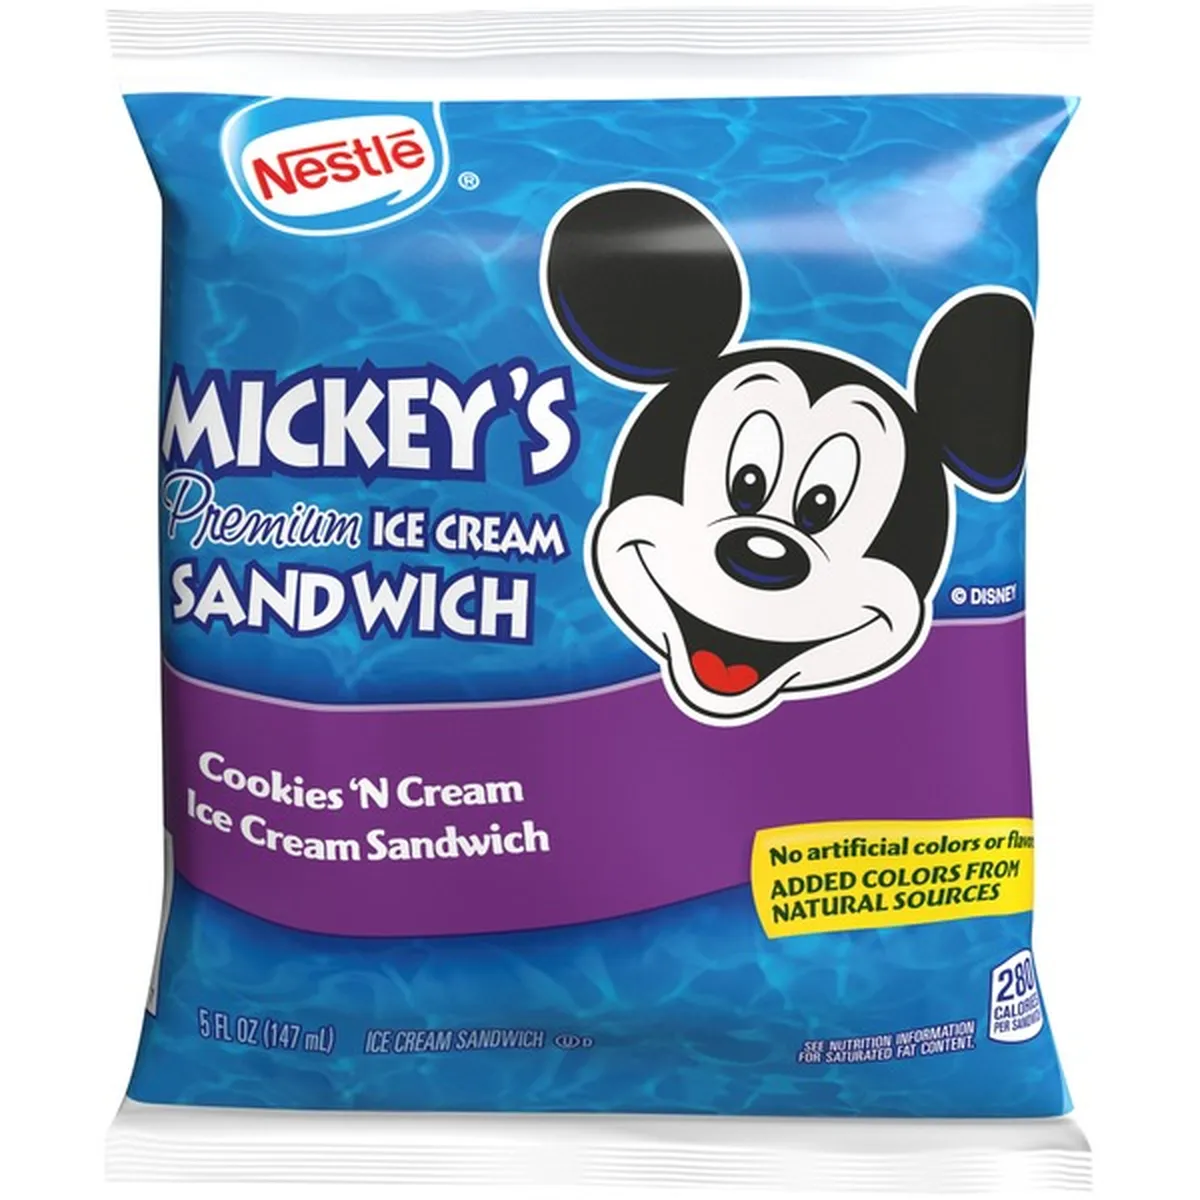 Nestle Mickey's Cookies 'N Cream Premium Ice Cream Sandwich (5 fl oz)  Delivery or Pickup Near Me - Instacart